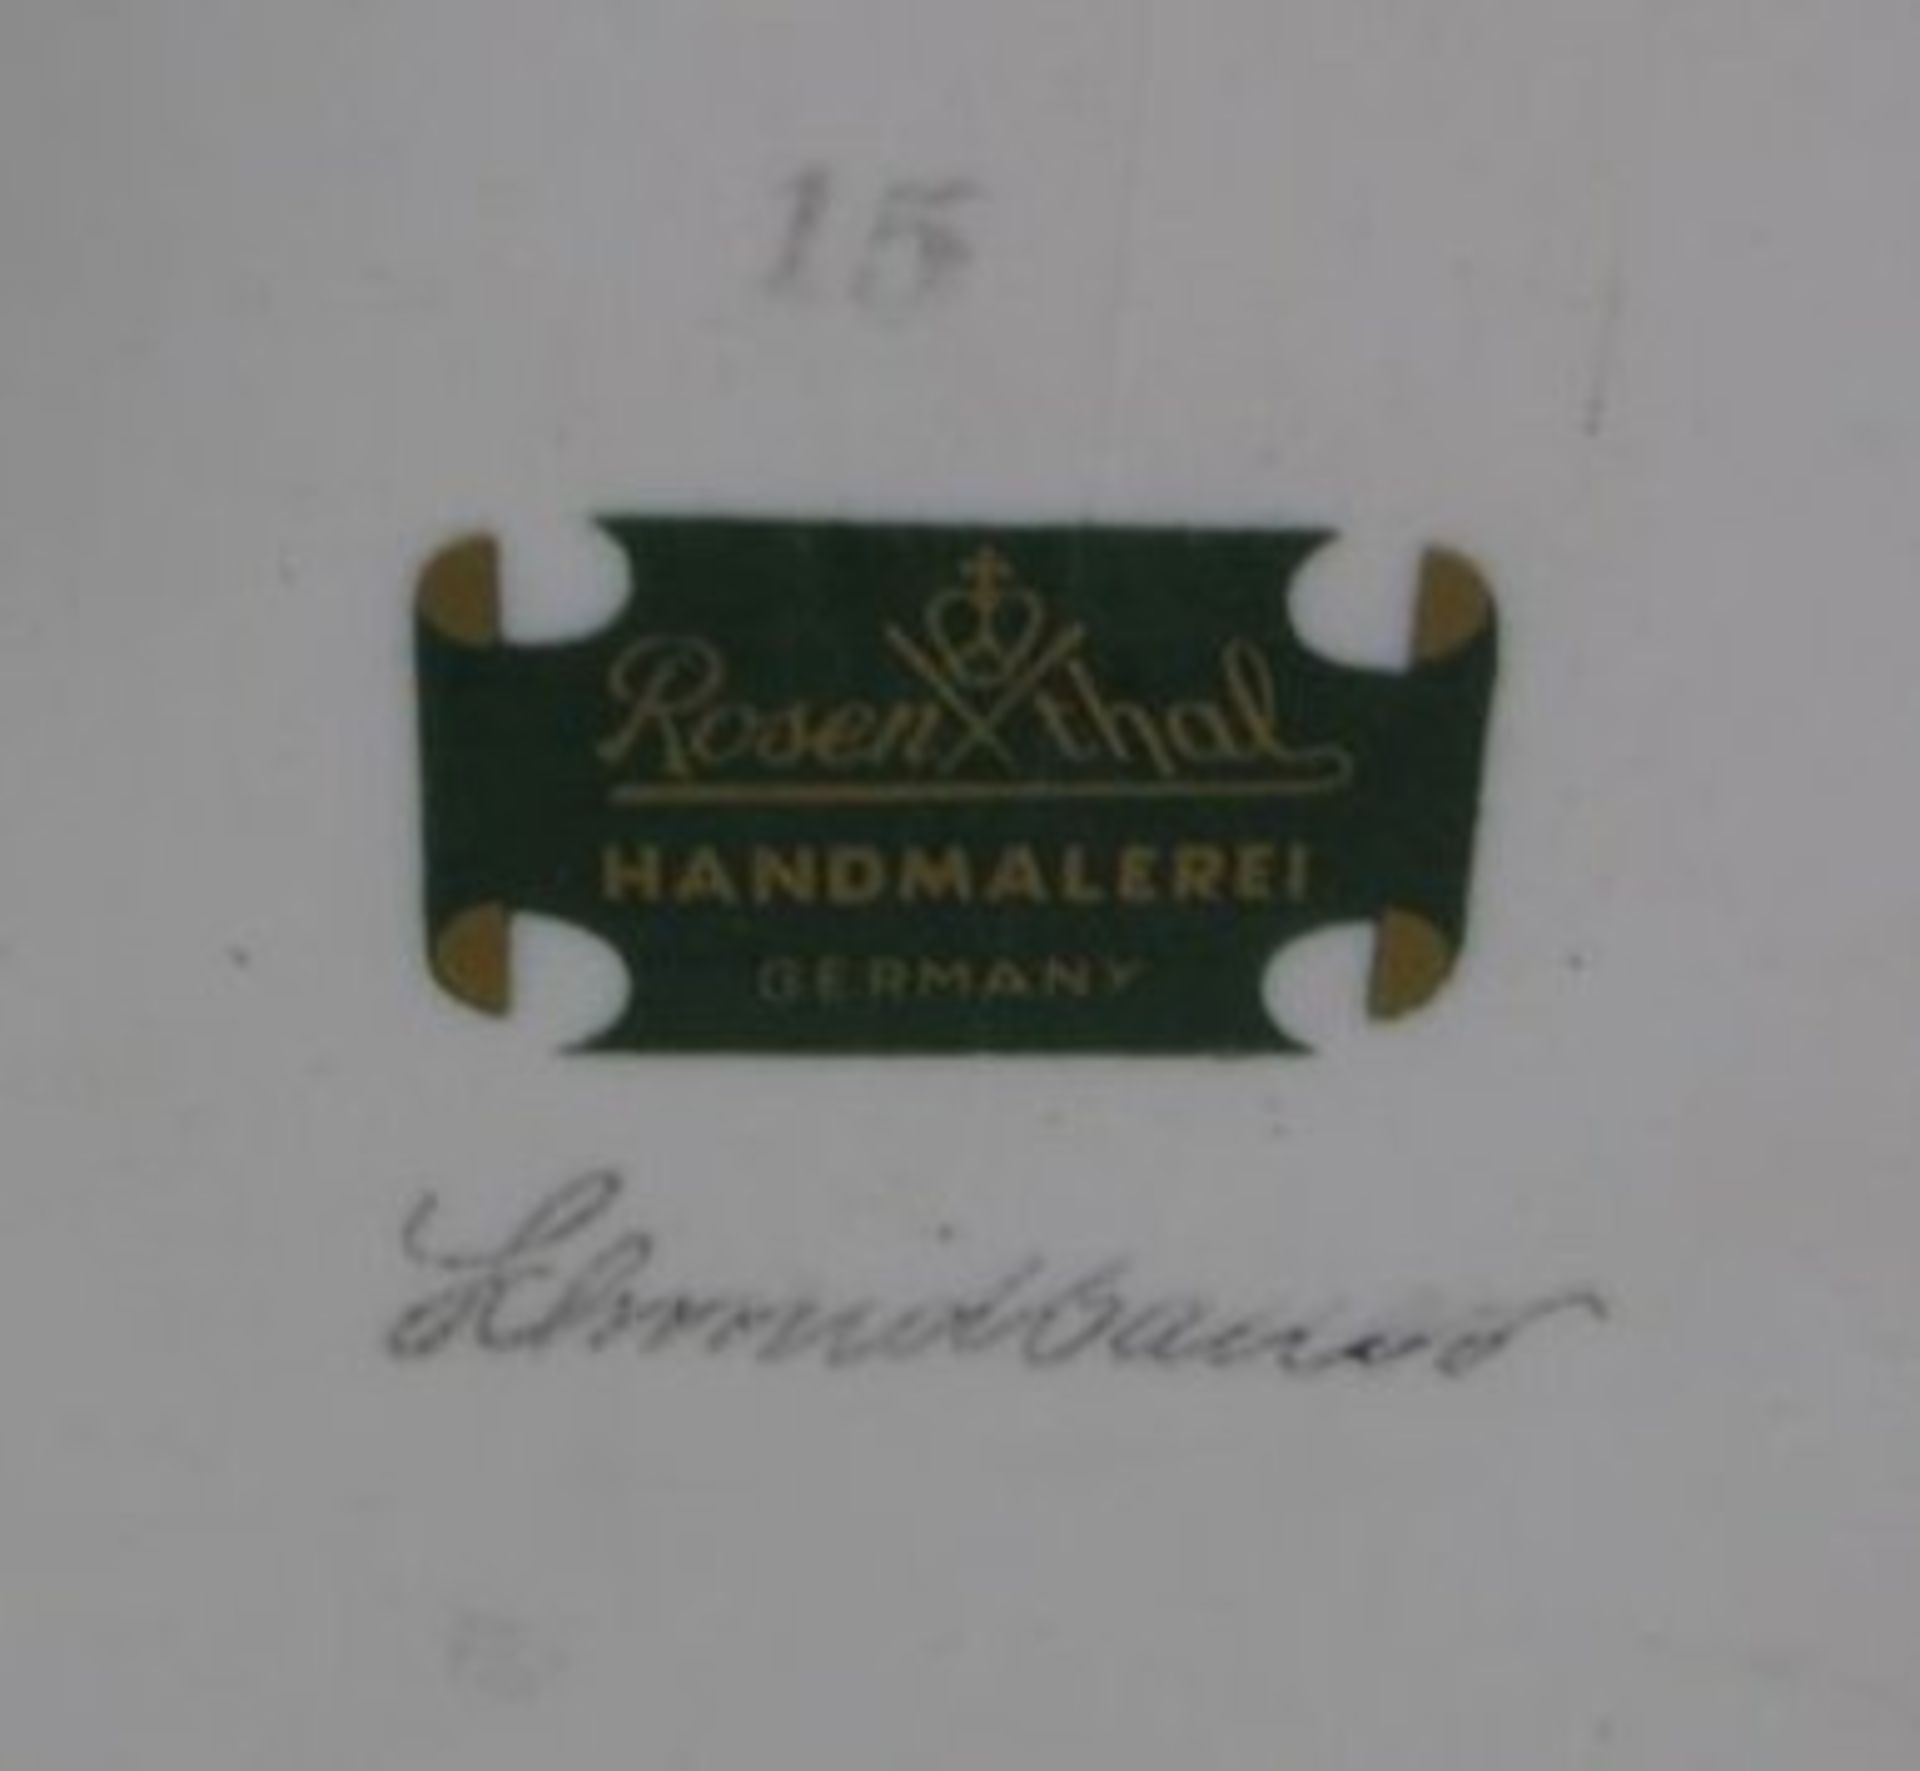 Porzellanbildplatte "Silberdisteln", u. r. sign. F. Schmidbauer, Rosenthal, polychrome - Bild 2 aus 3